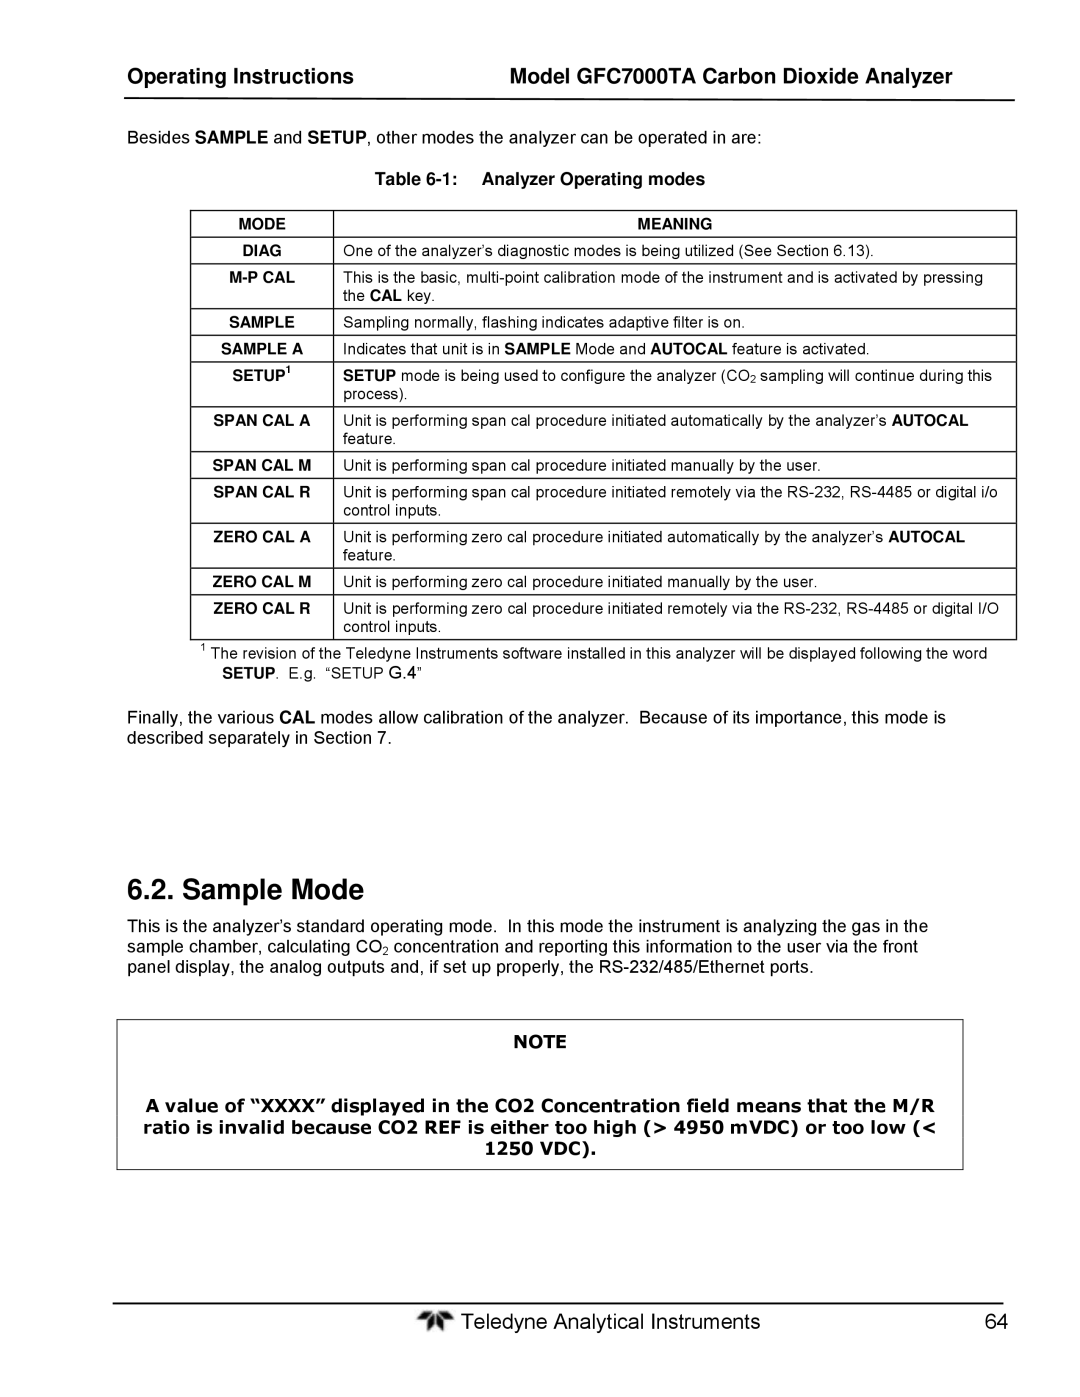 Teledyne gfc 7000ta operation manual Sample Mode, Analyzer Operating modes, Meaning 